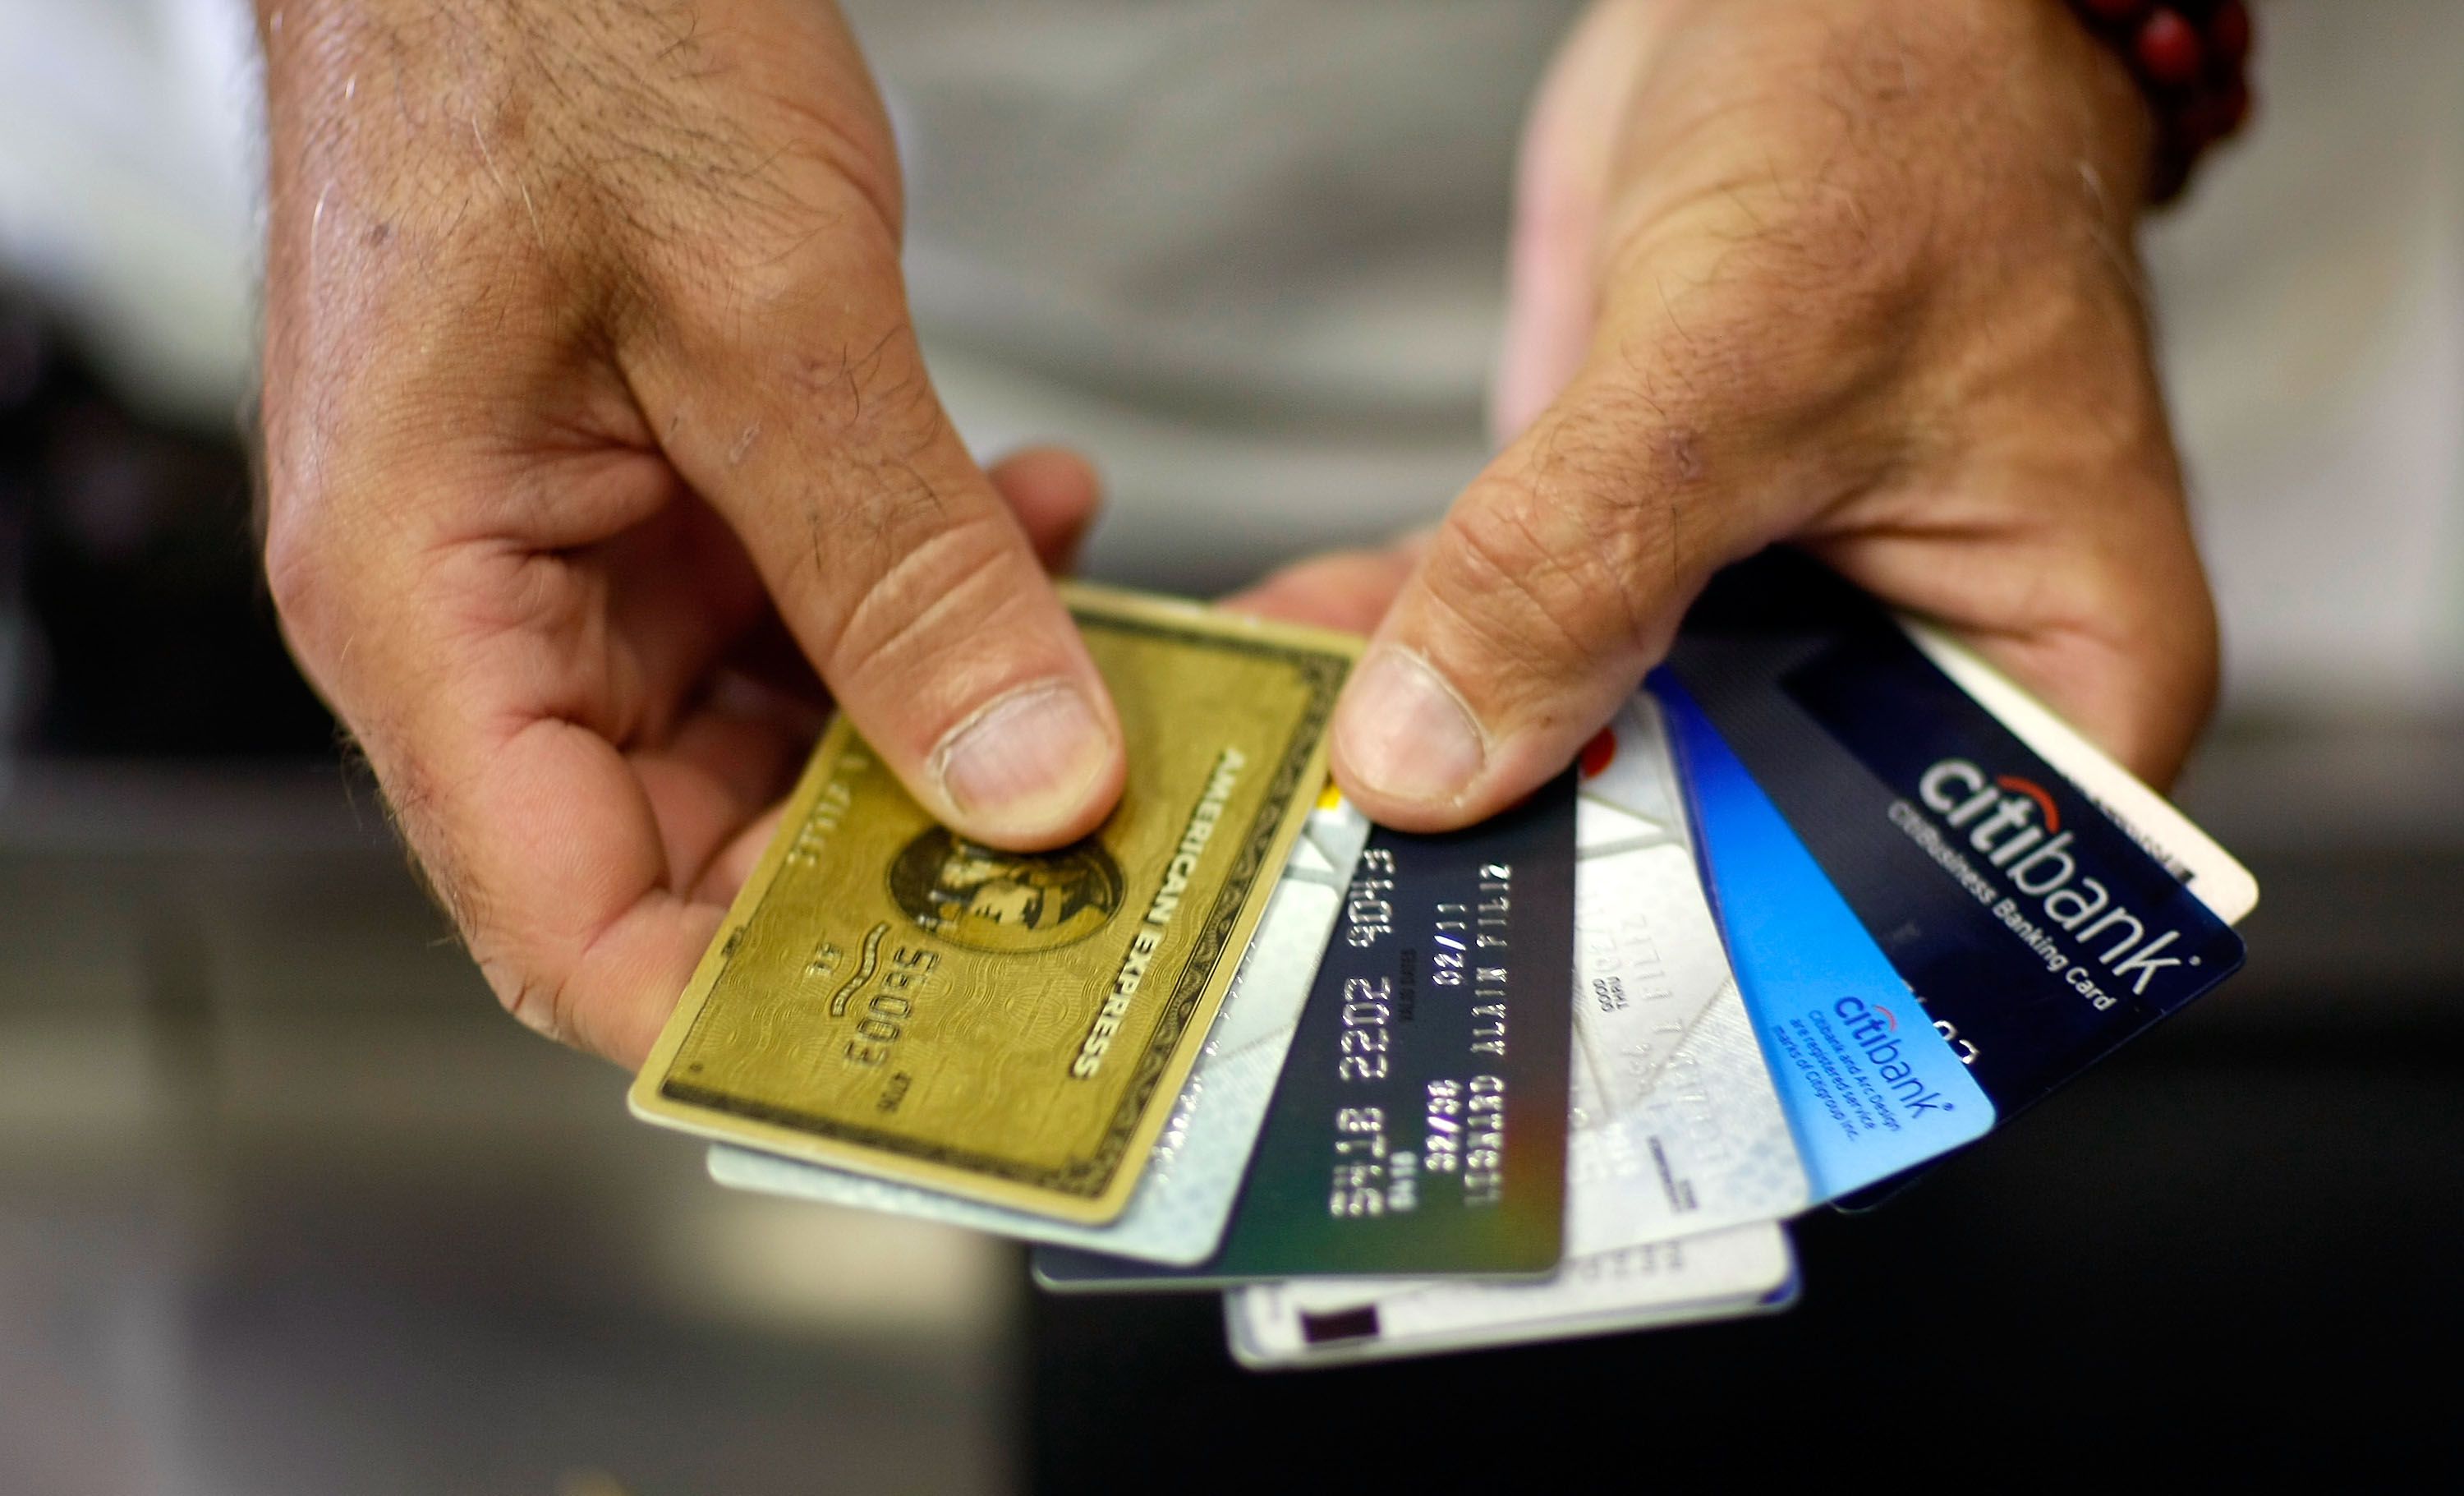 credit-card-reform-legislation-would-tighten-rules-on-rates-and-fees-87874564-576f6ece3df78cb62cdbdbba.jpg